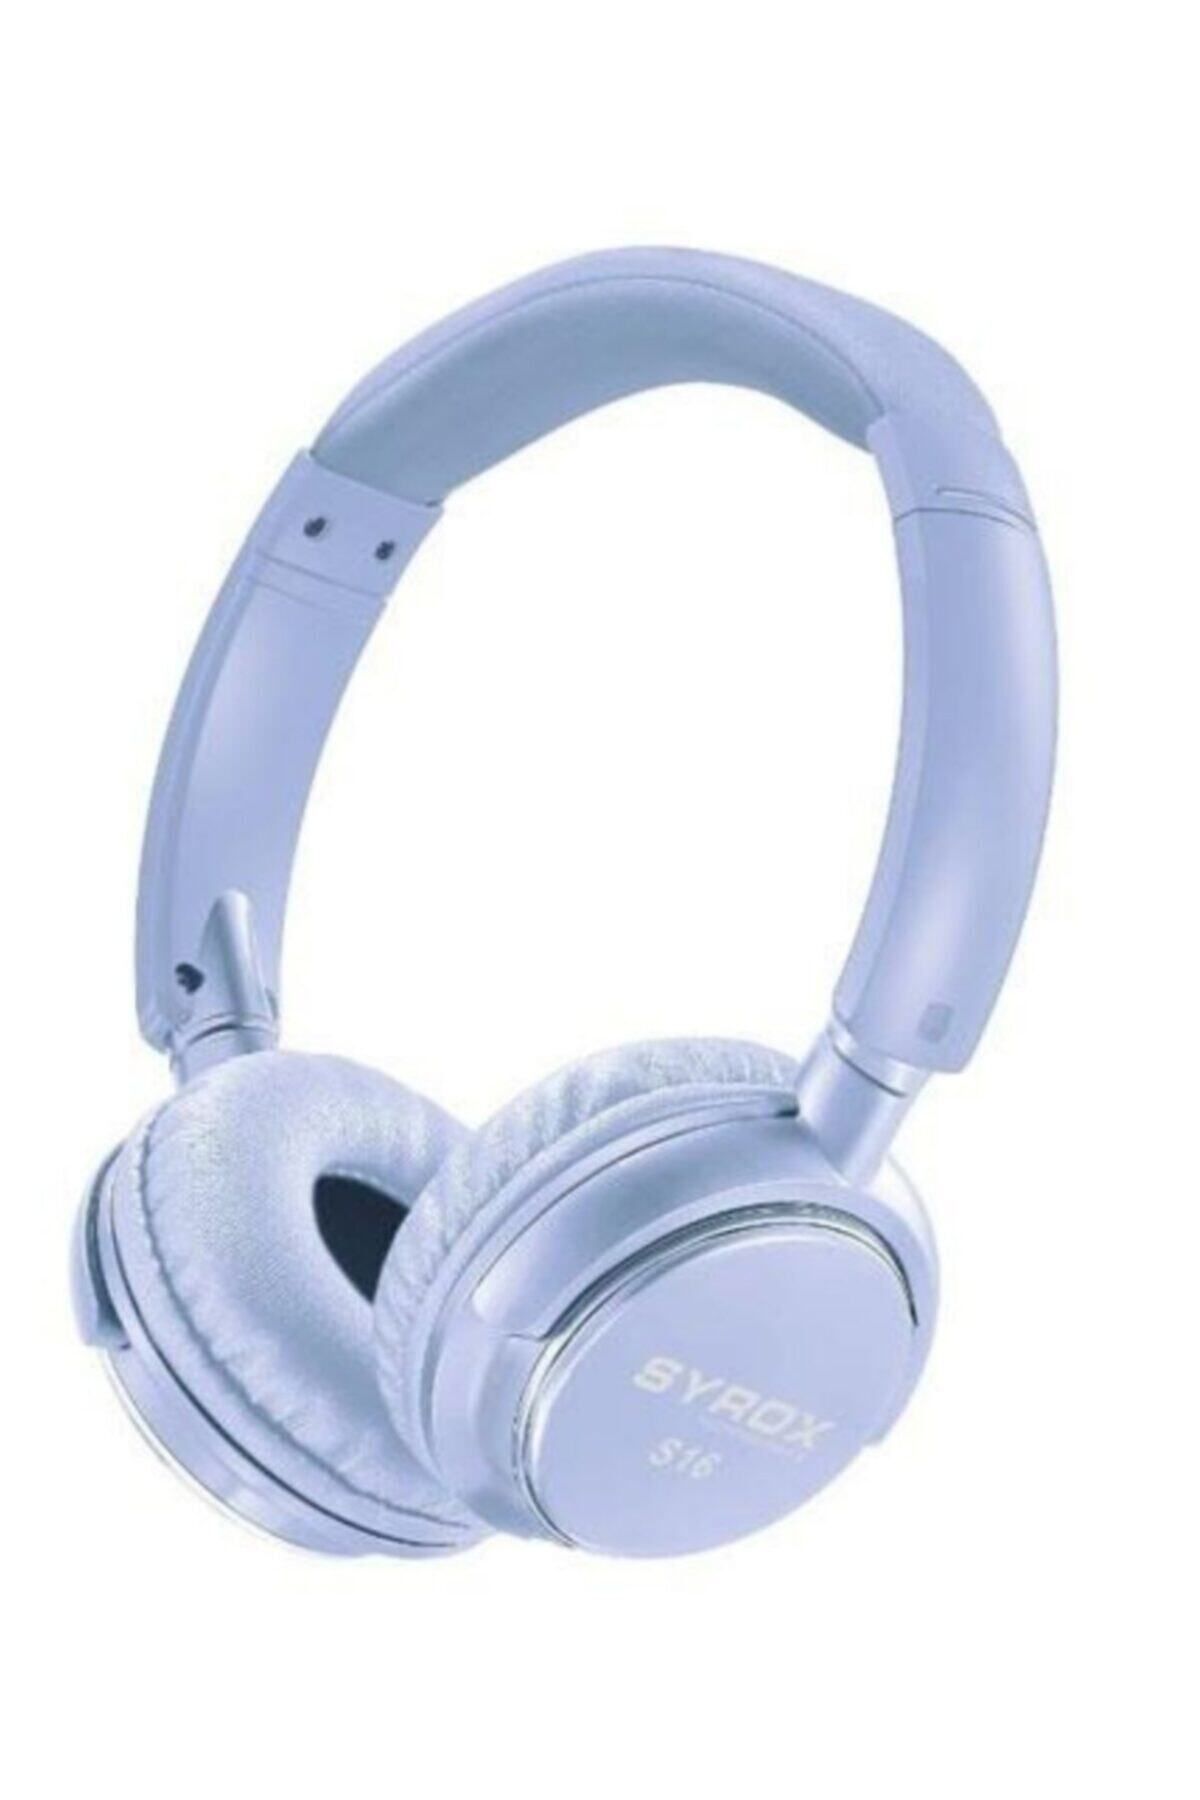 Syrox Kablosuz Bluetooth Kulak Üstü Kulaklık